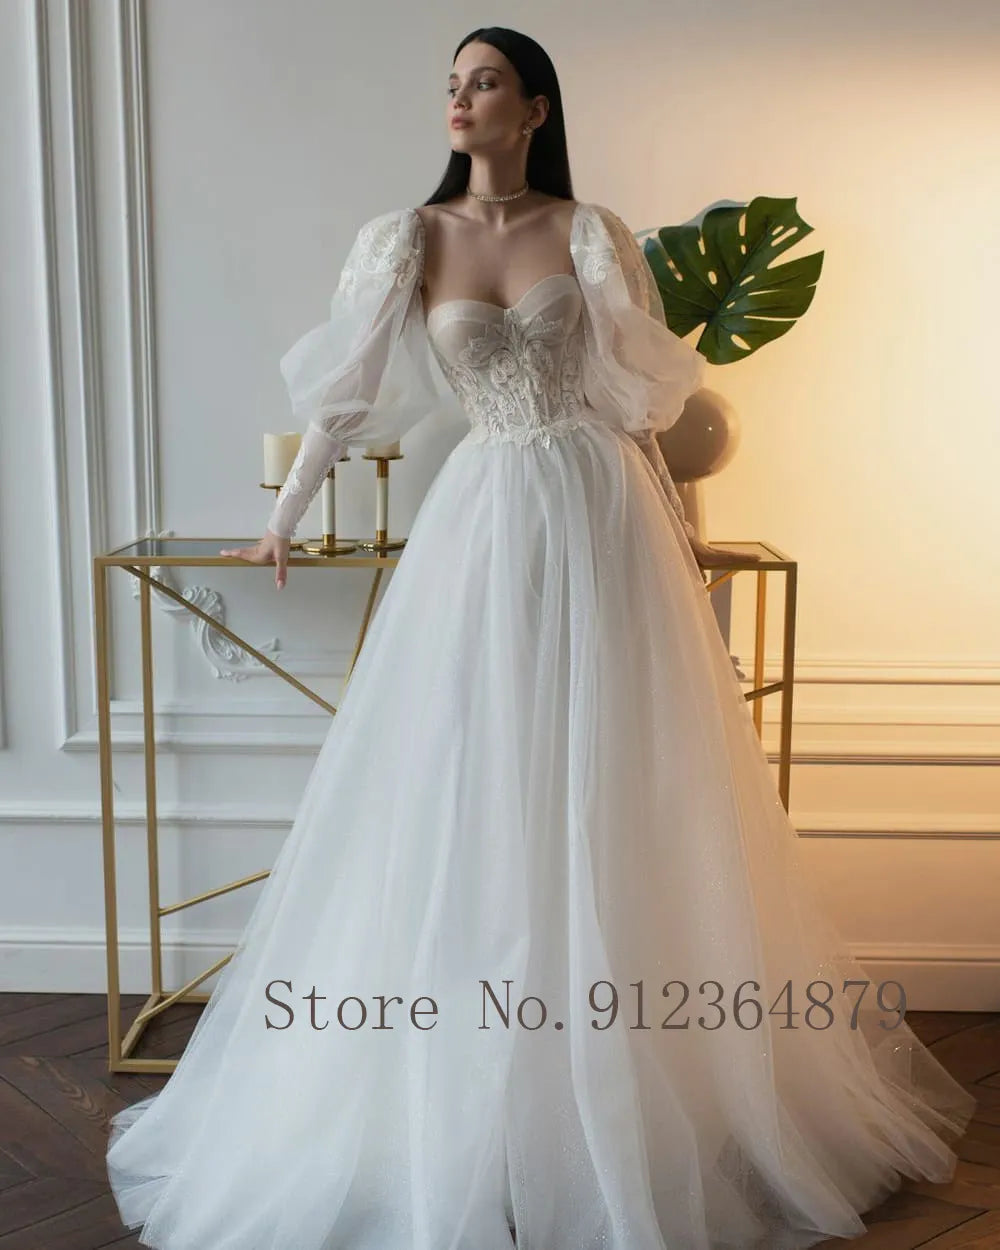 Fairy Boho Wedding Dresses Puff Sleeve Princess Vintage Bride Dress Lace Wedding Gowns Corset Back Strapless Robe De Mariee